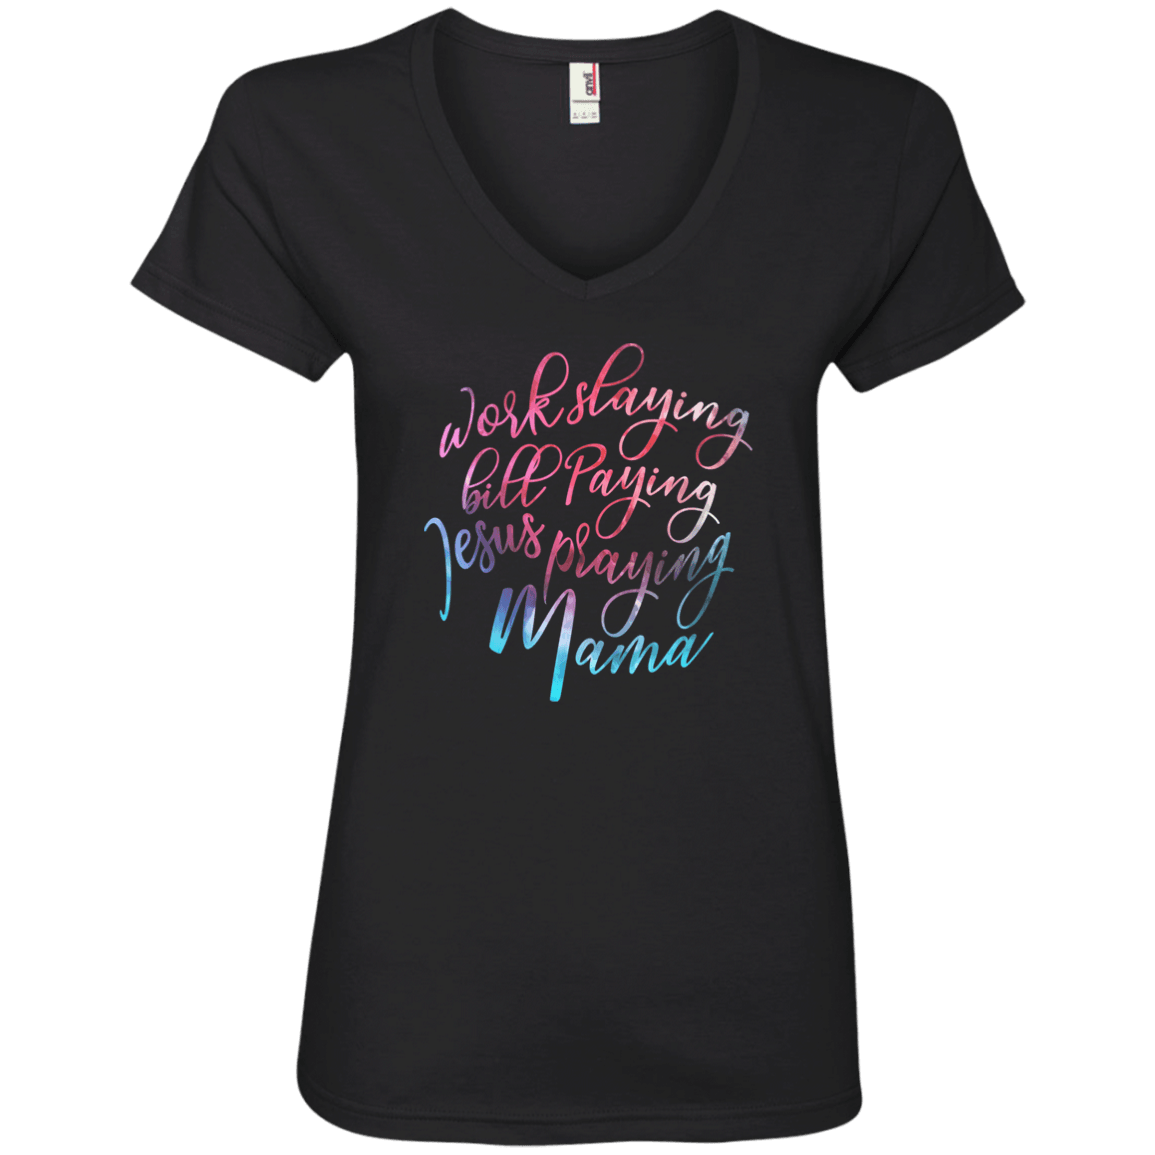 Designs by MyUtopia Shout Out:Jesus Praying Mama Ladies' V-Neck T-Shirt,Black / S,Ladies T-Shirts